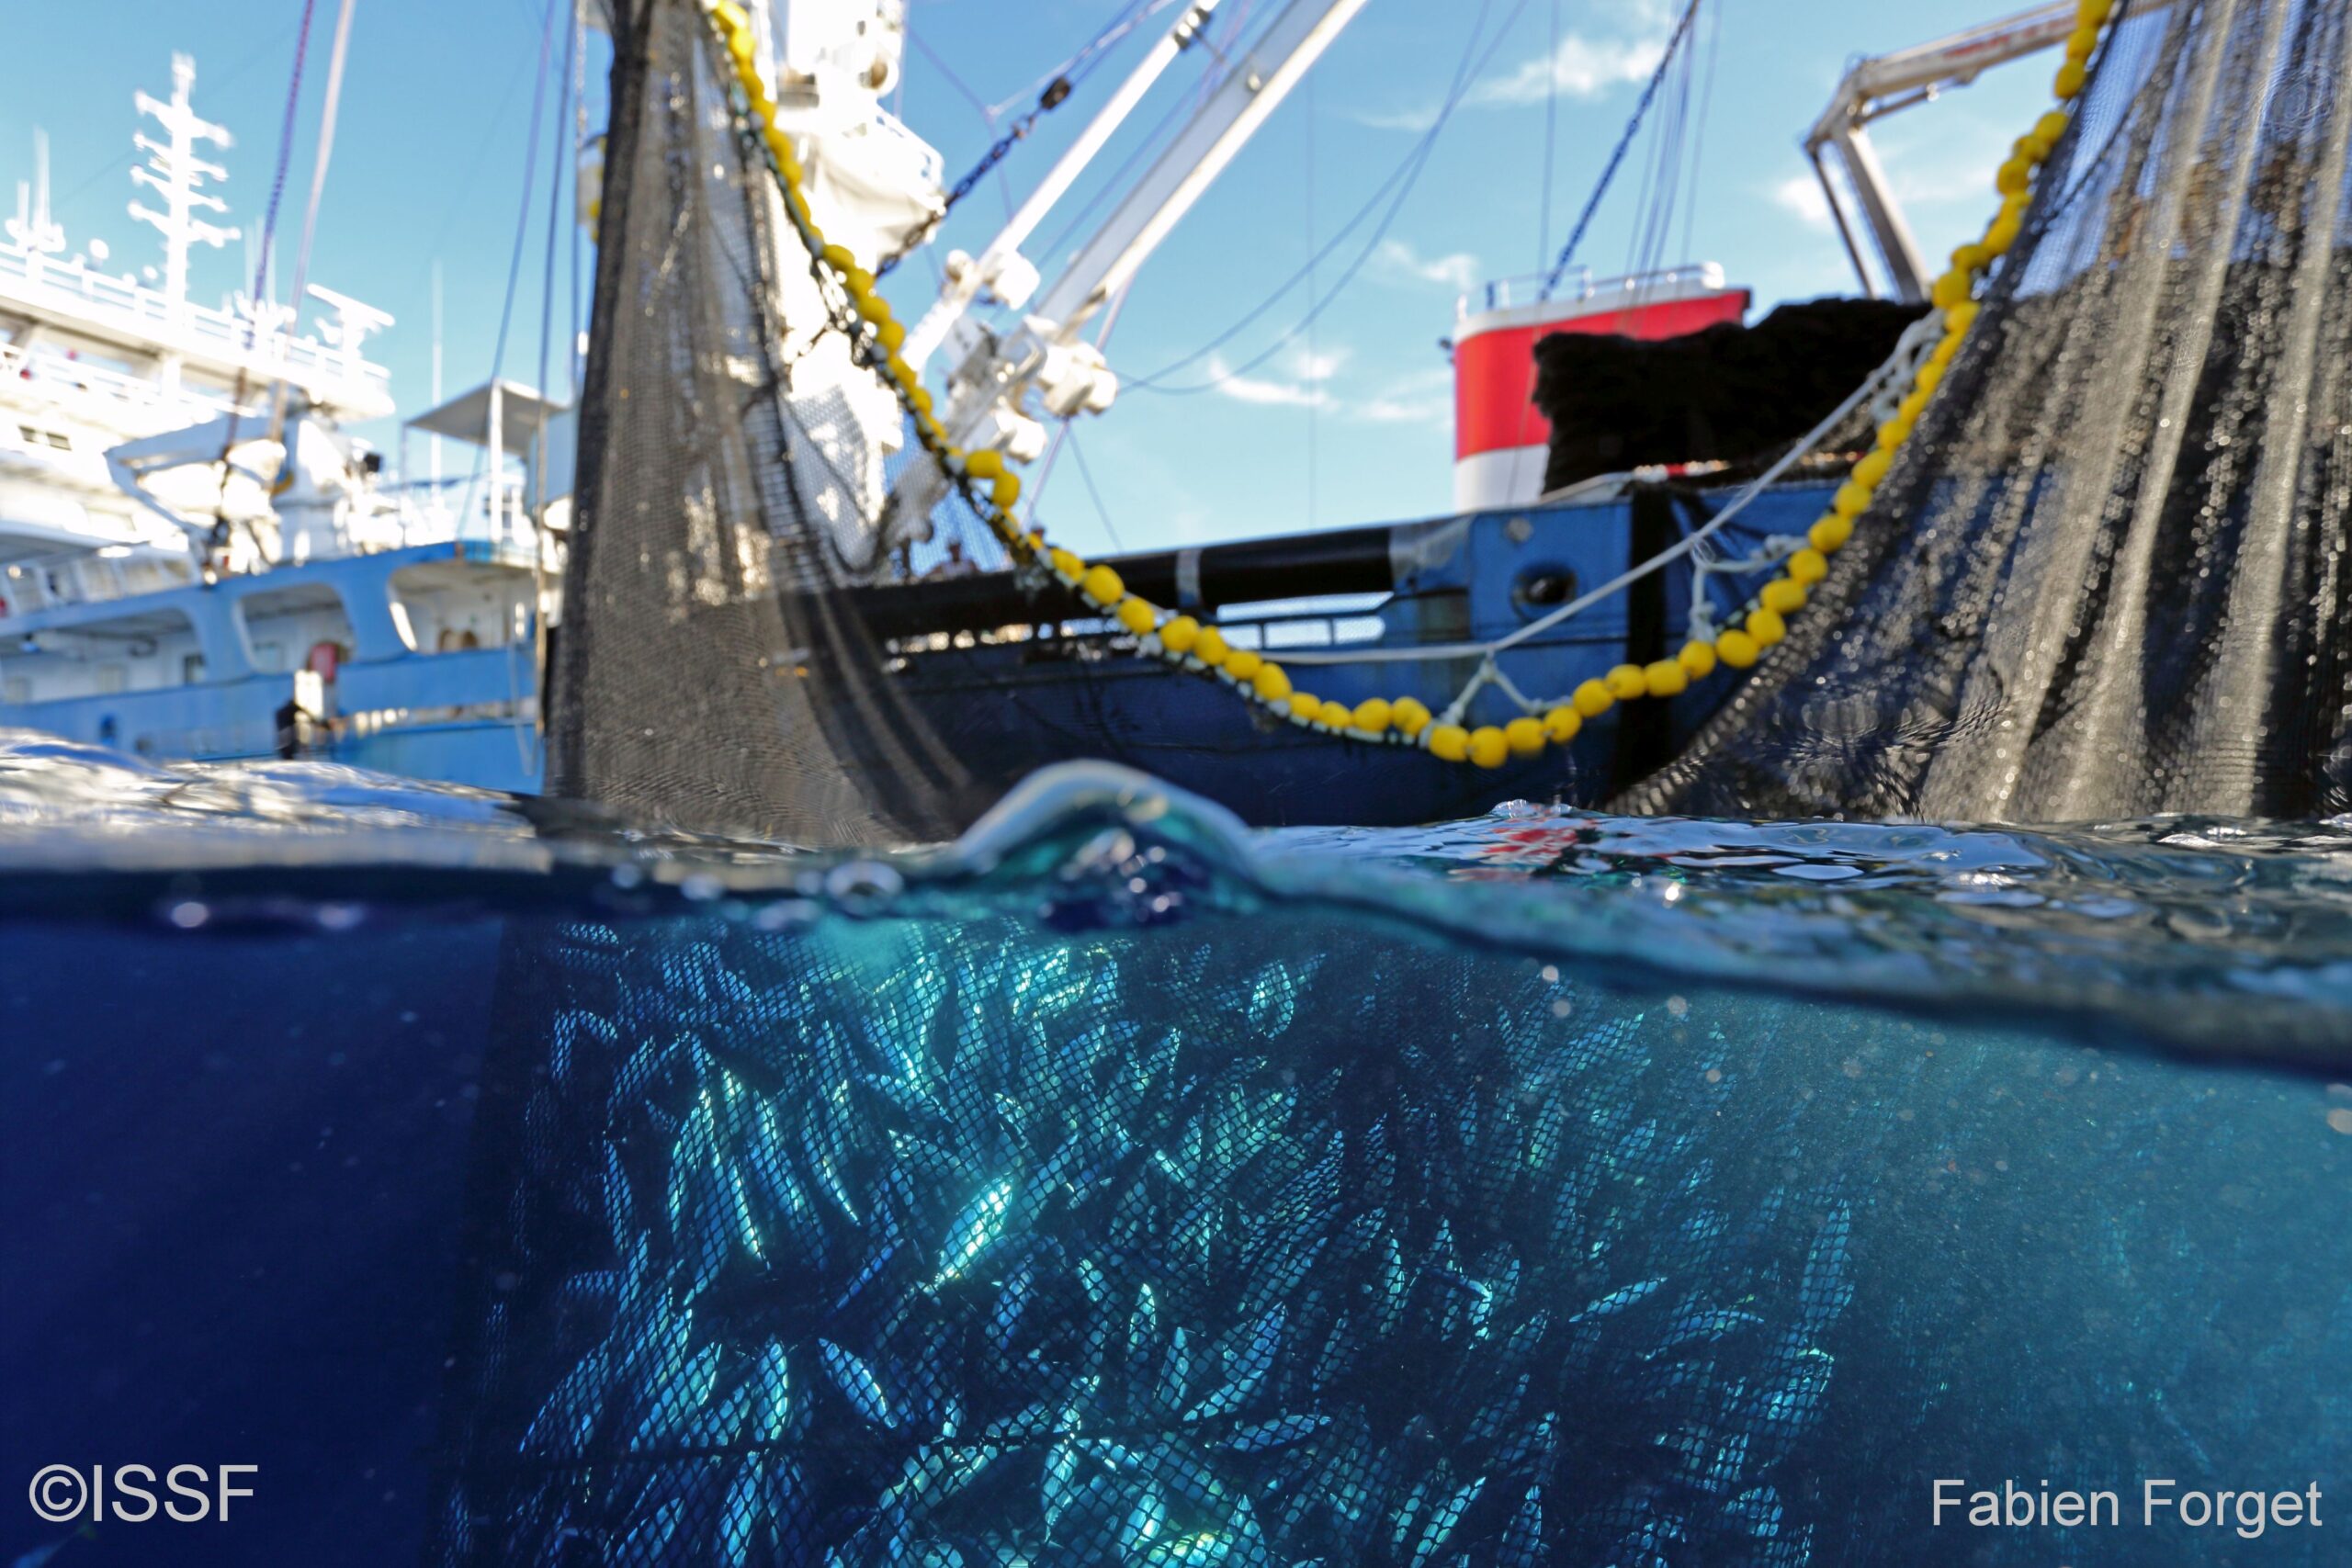 Ring net - International Seafood Sustainability Foundation